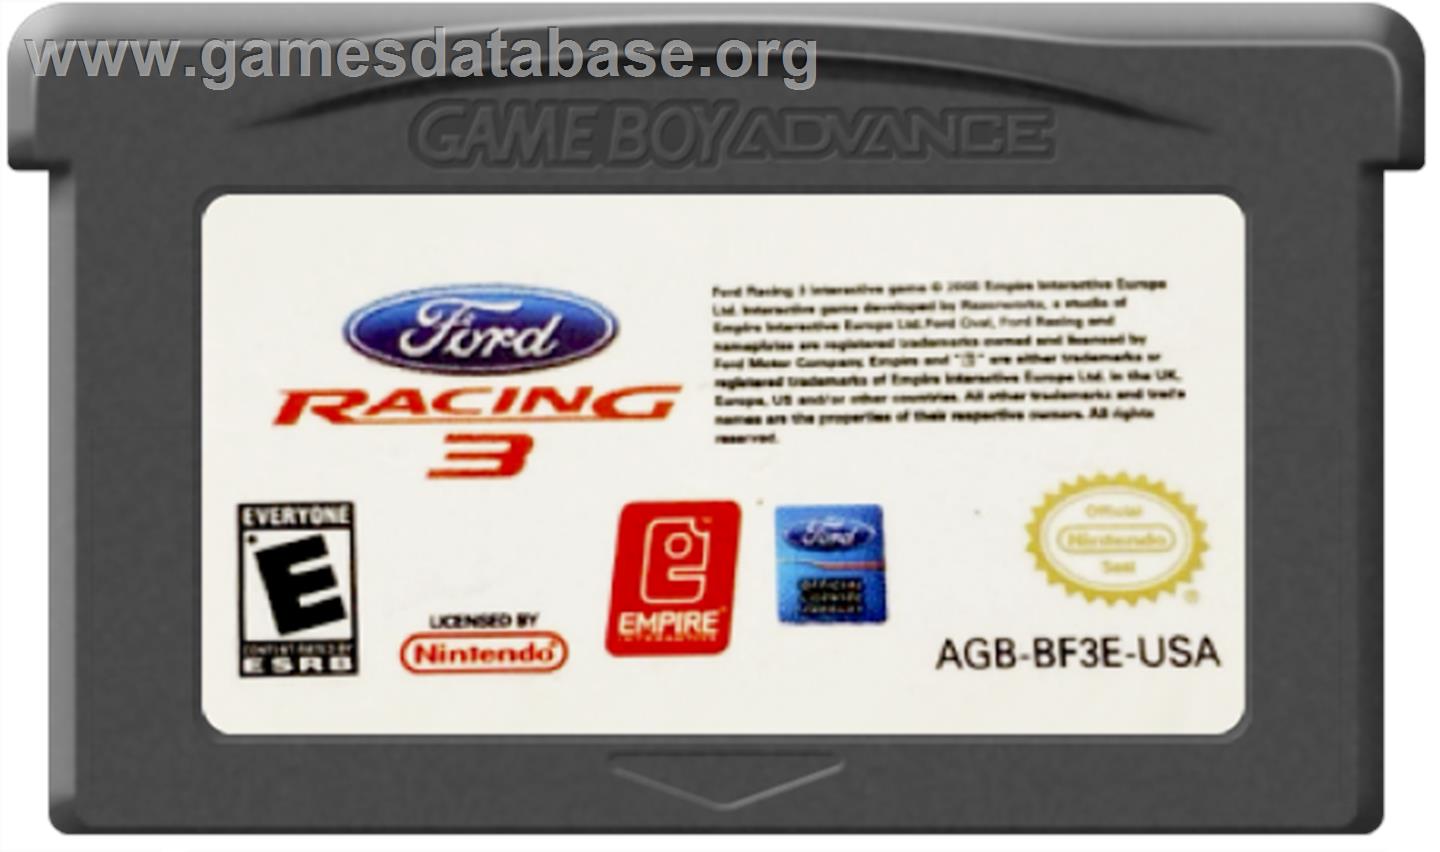 Ford Racing 3 - Nintendo Game Boy Advance - Artwork - Cartridge